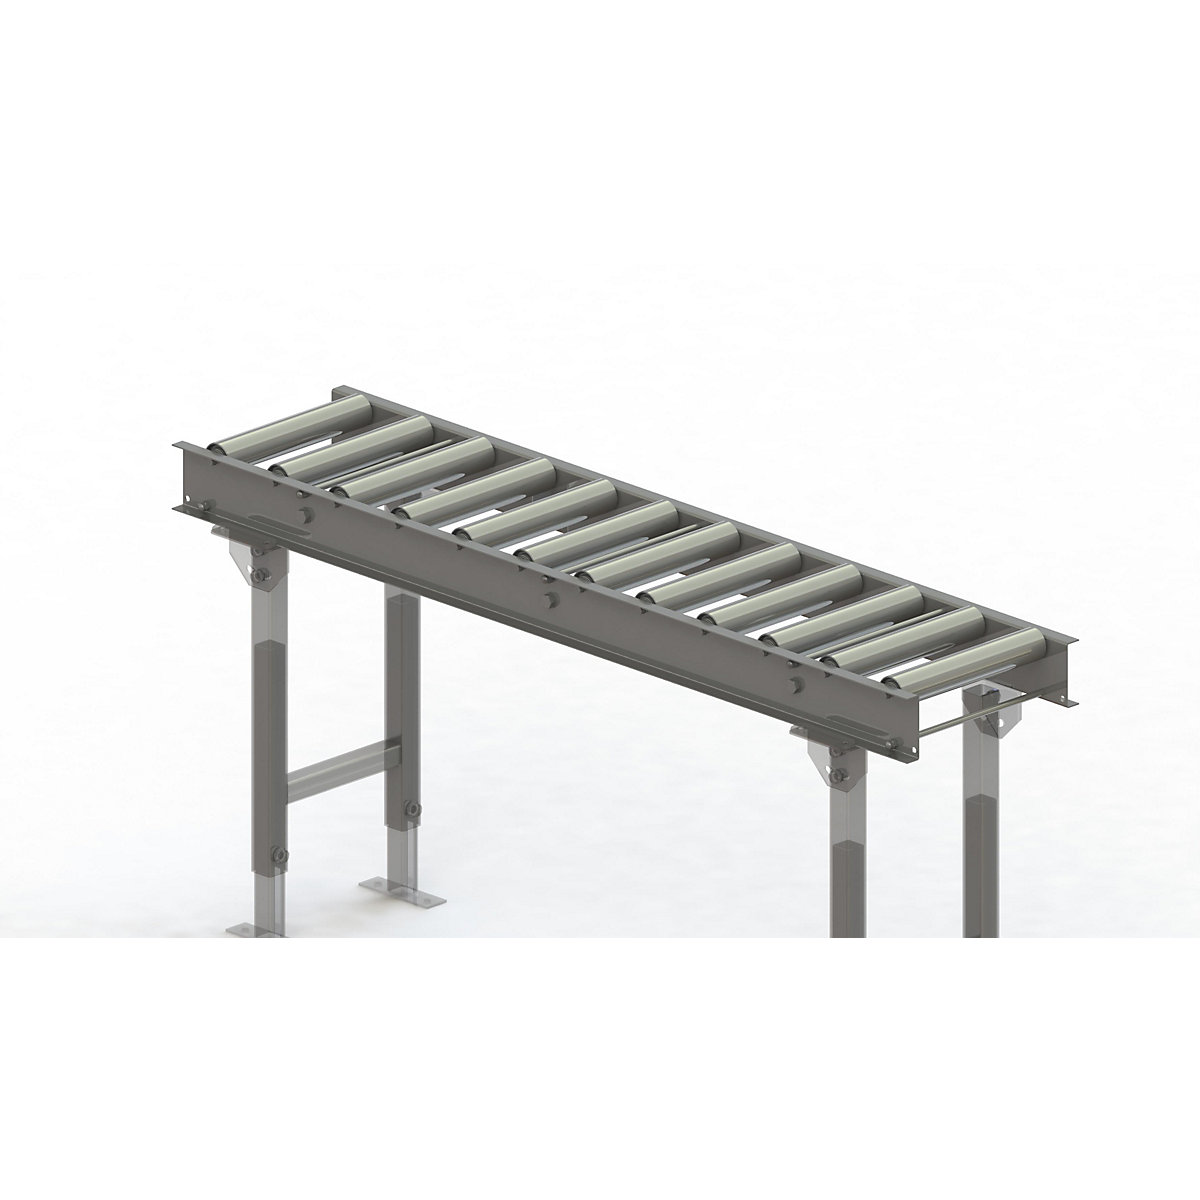 Gura – Roller conveyor, steel frame with zinc plated steel rollers, track width 300 mm, distance between axles 125 mm, length 1.5 m